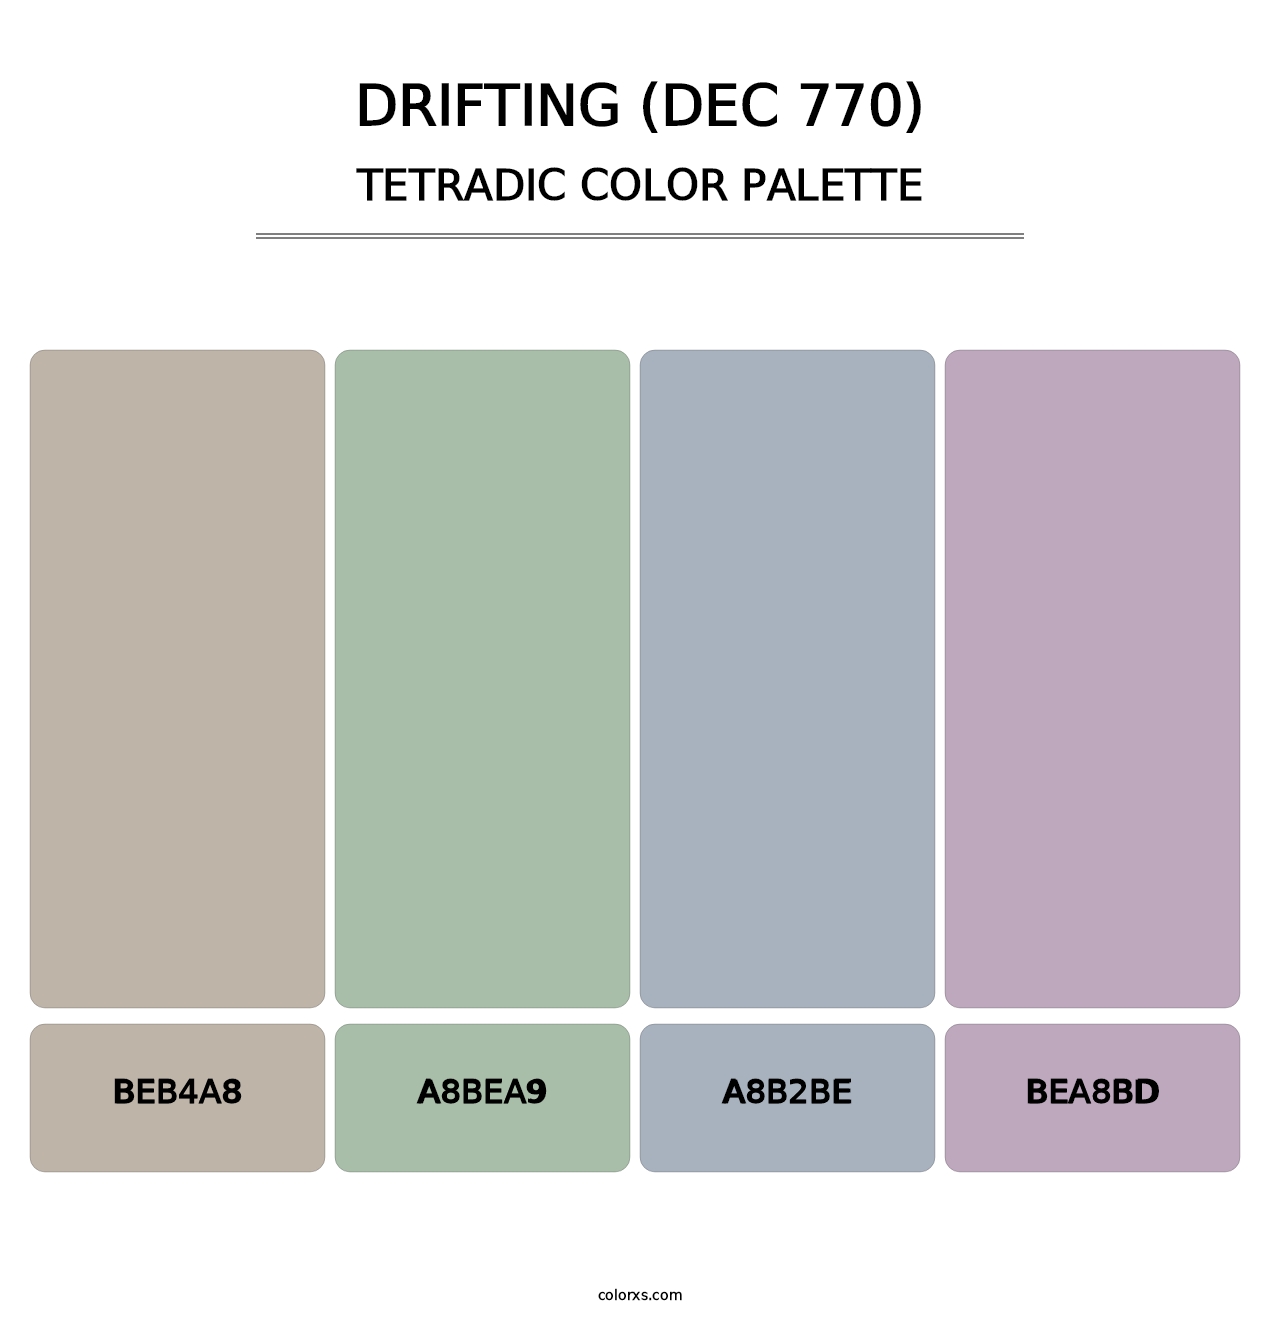 Drifting (DEC 770) - Tetradic Color Palette